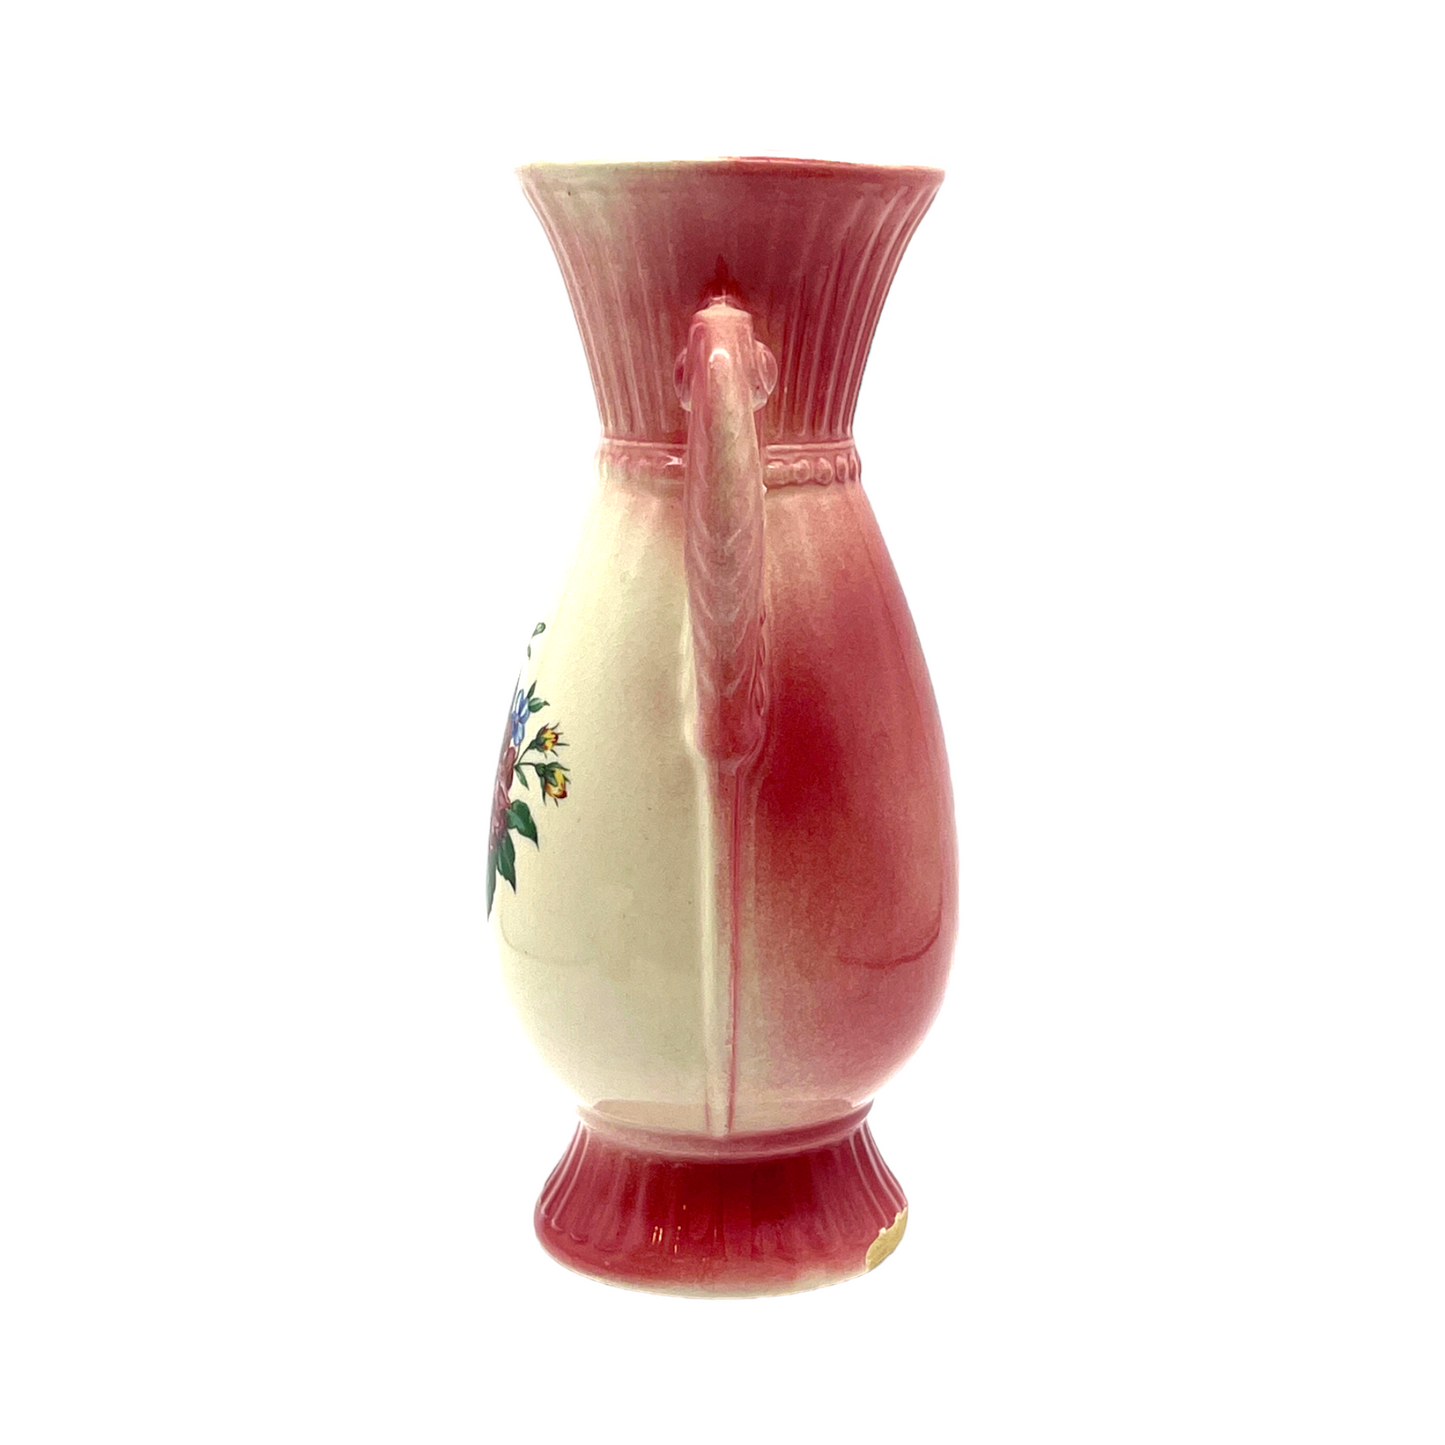 Royal Copley - Decal Vase Pink Rose - Vintage - 7"